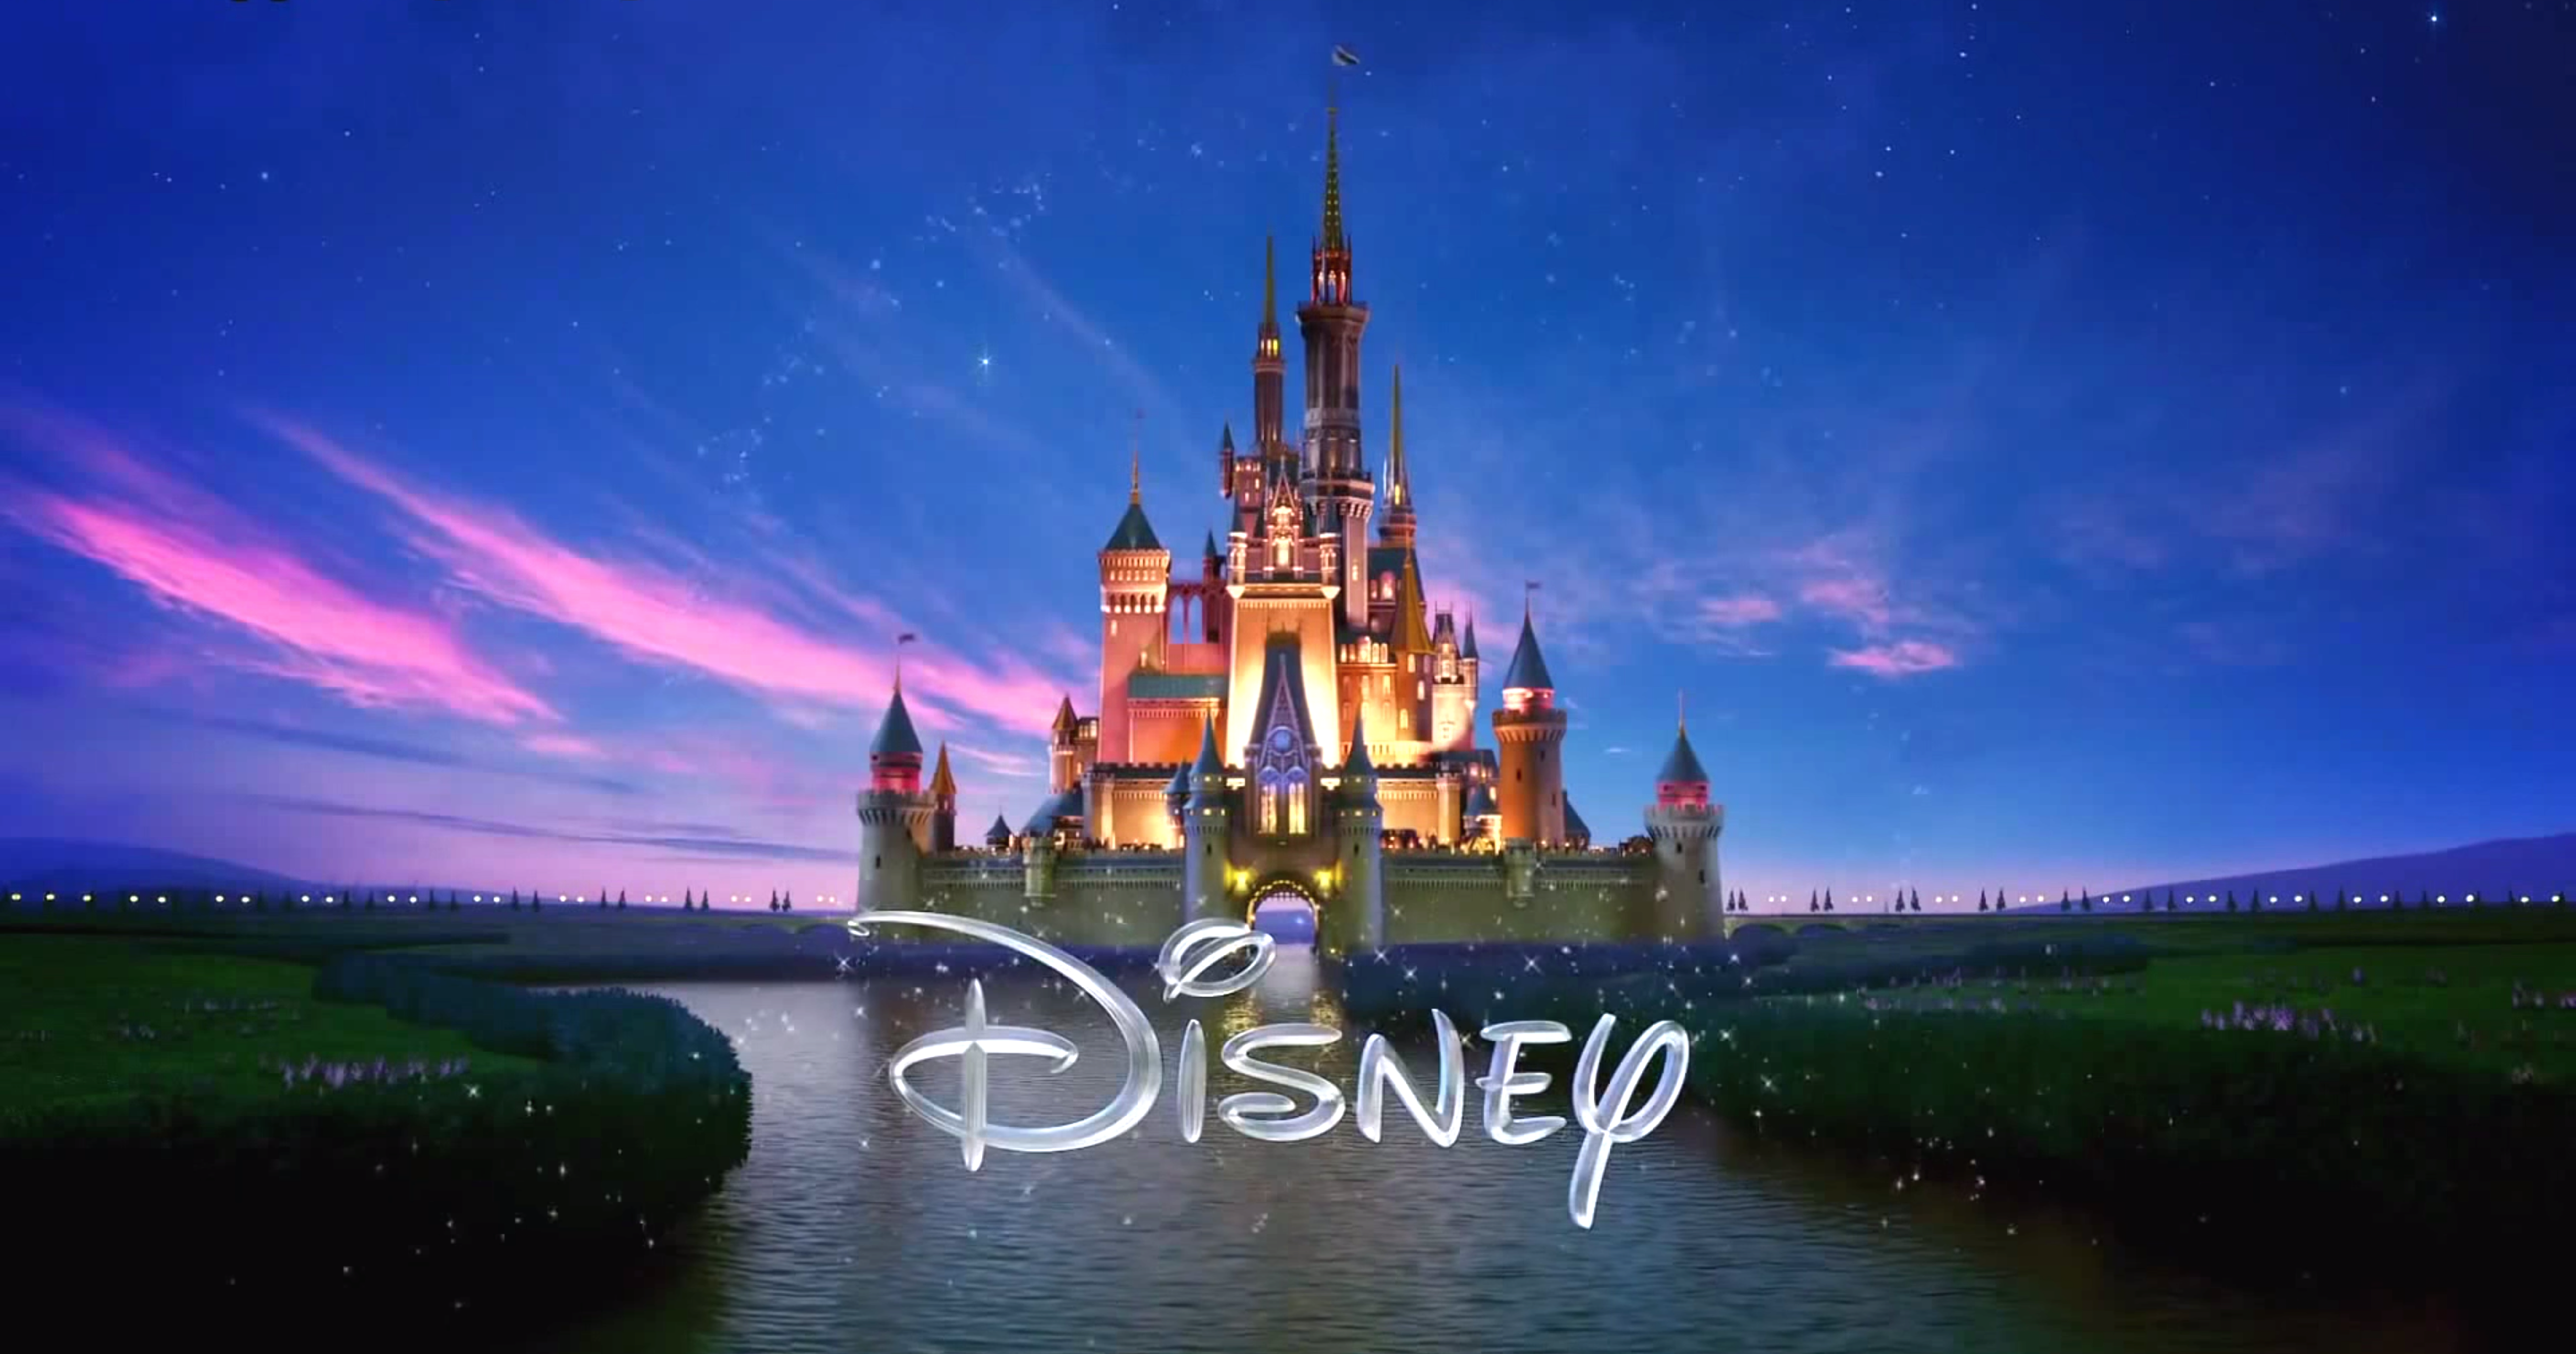 Disney Plus konkurrerar med Netflix i abonnentlojalitet